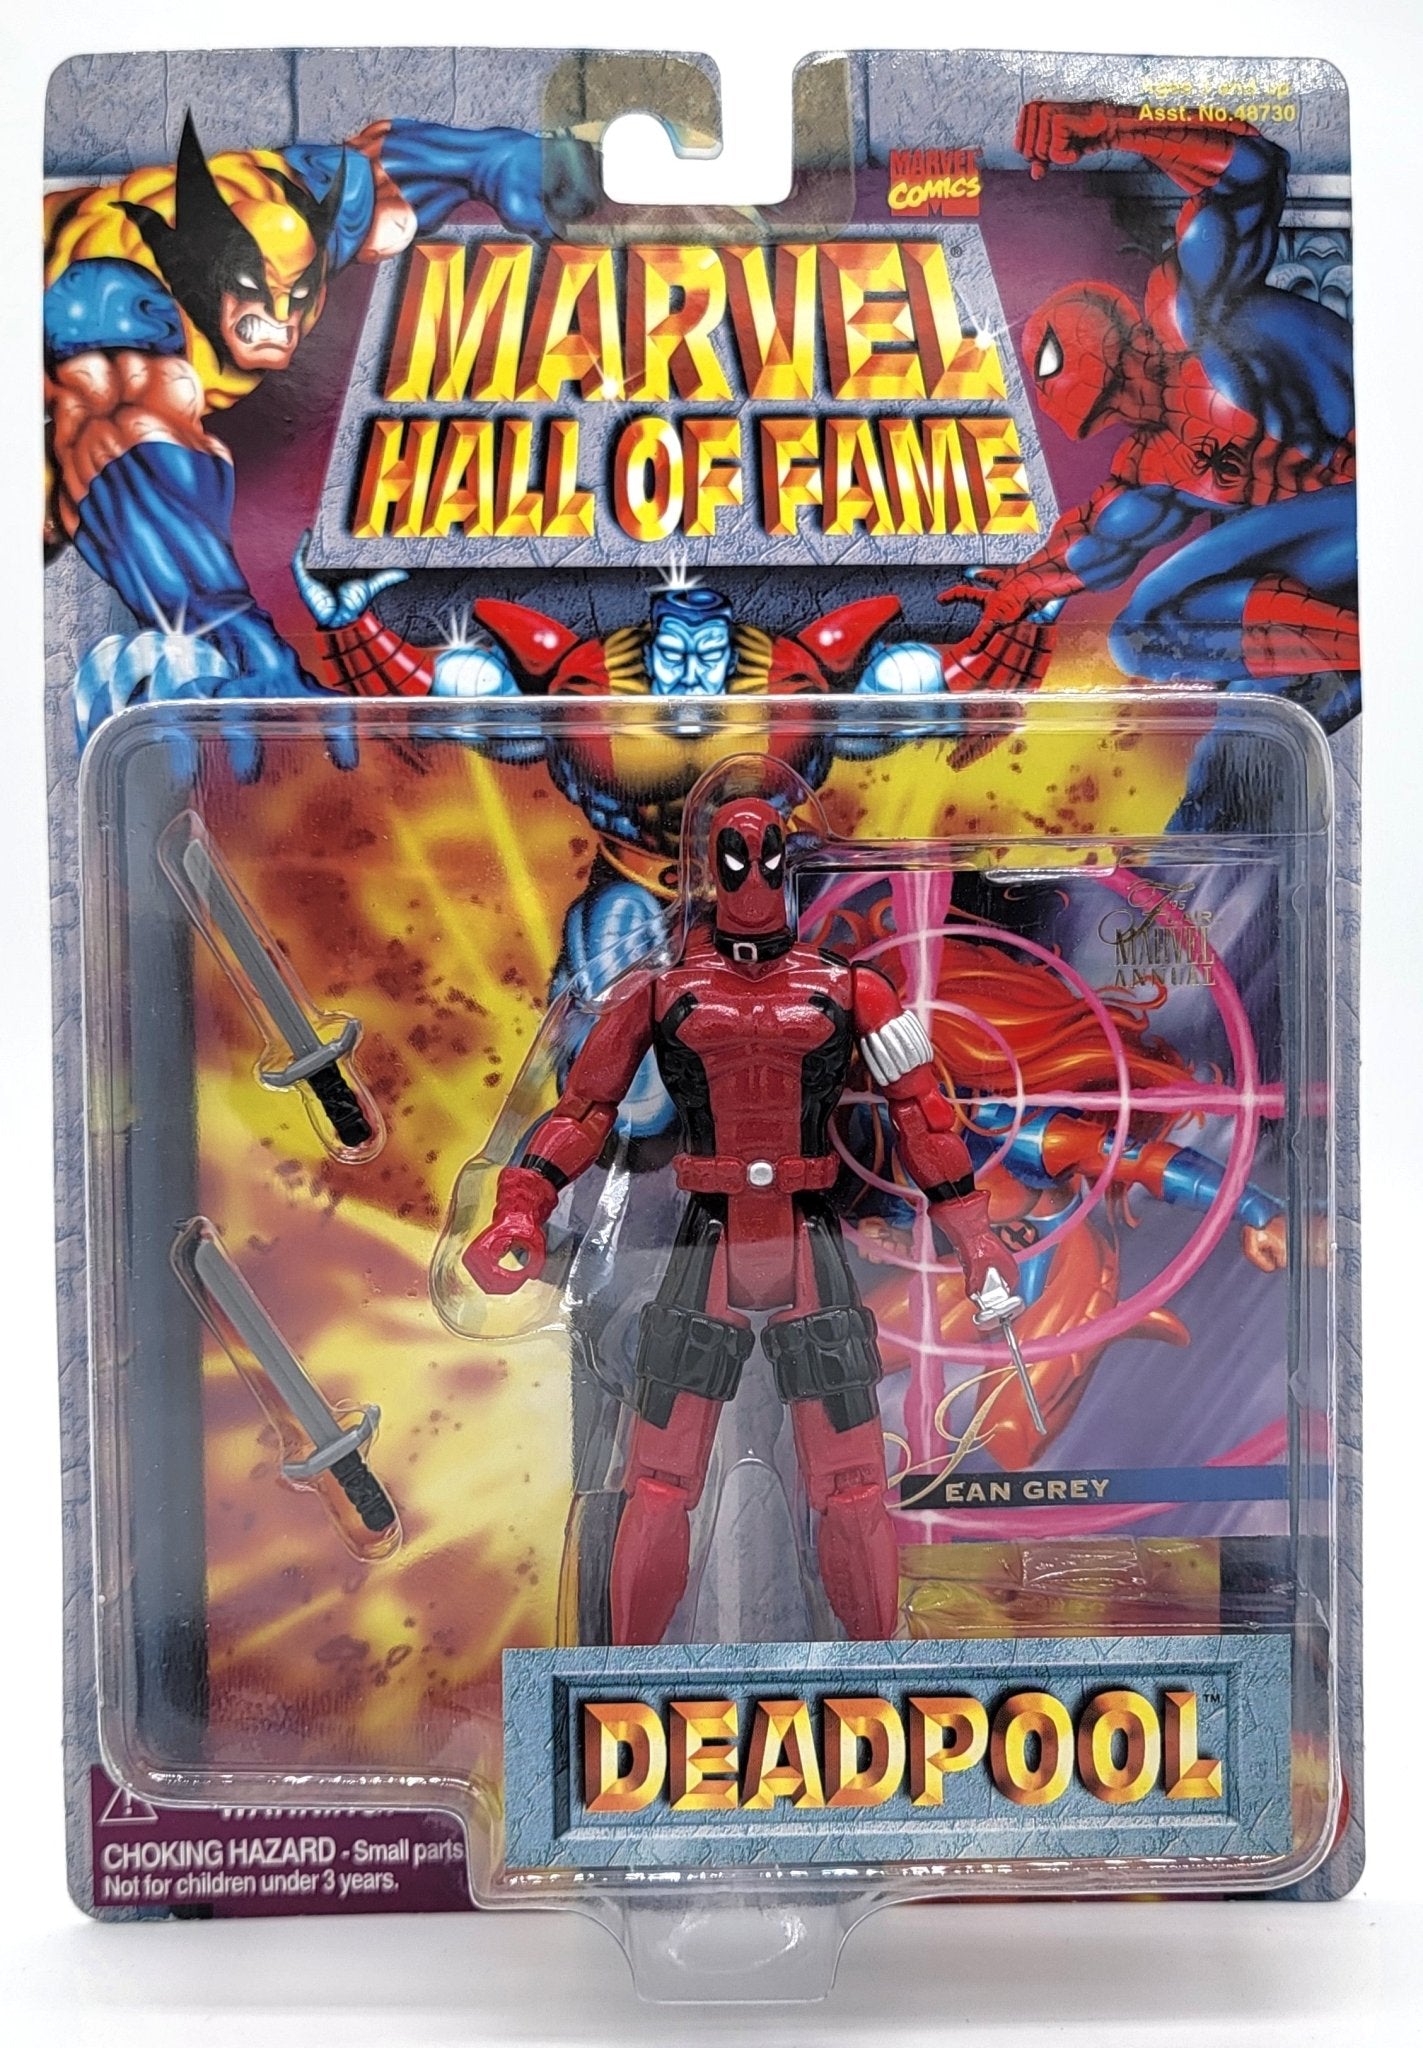 Toy Biz - Toy Biz | Marvel Hall of Fame - Deadpool 1996 | Vintage Marvel Action Figure - Action Figures - Steady Bunny Shop